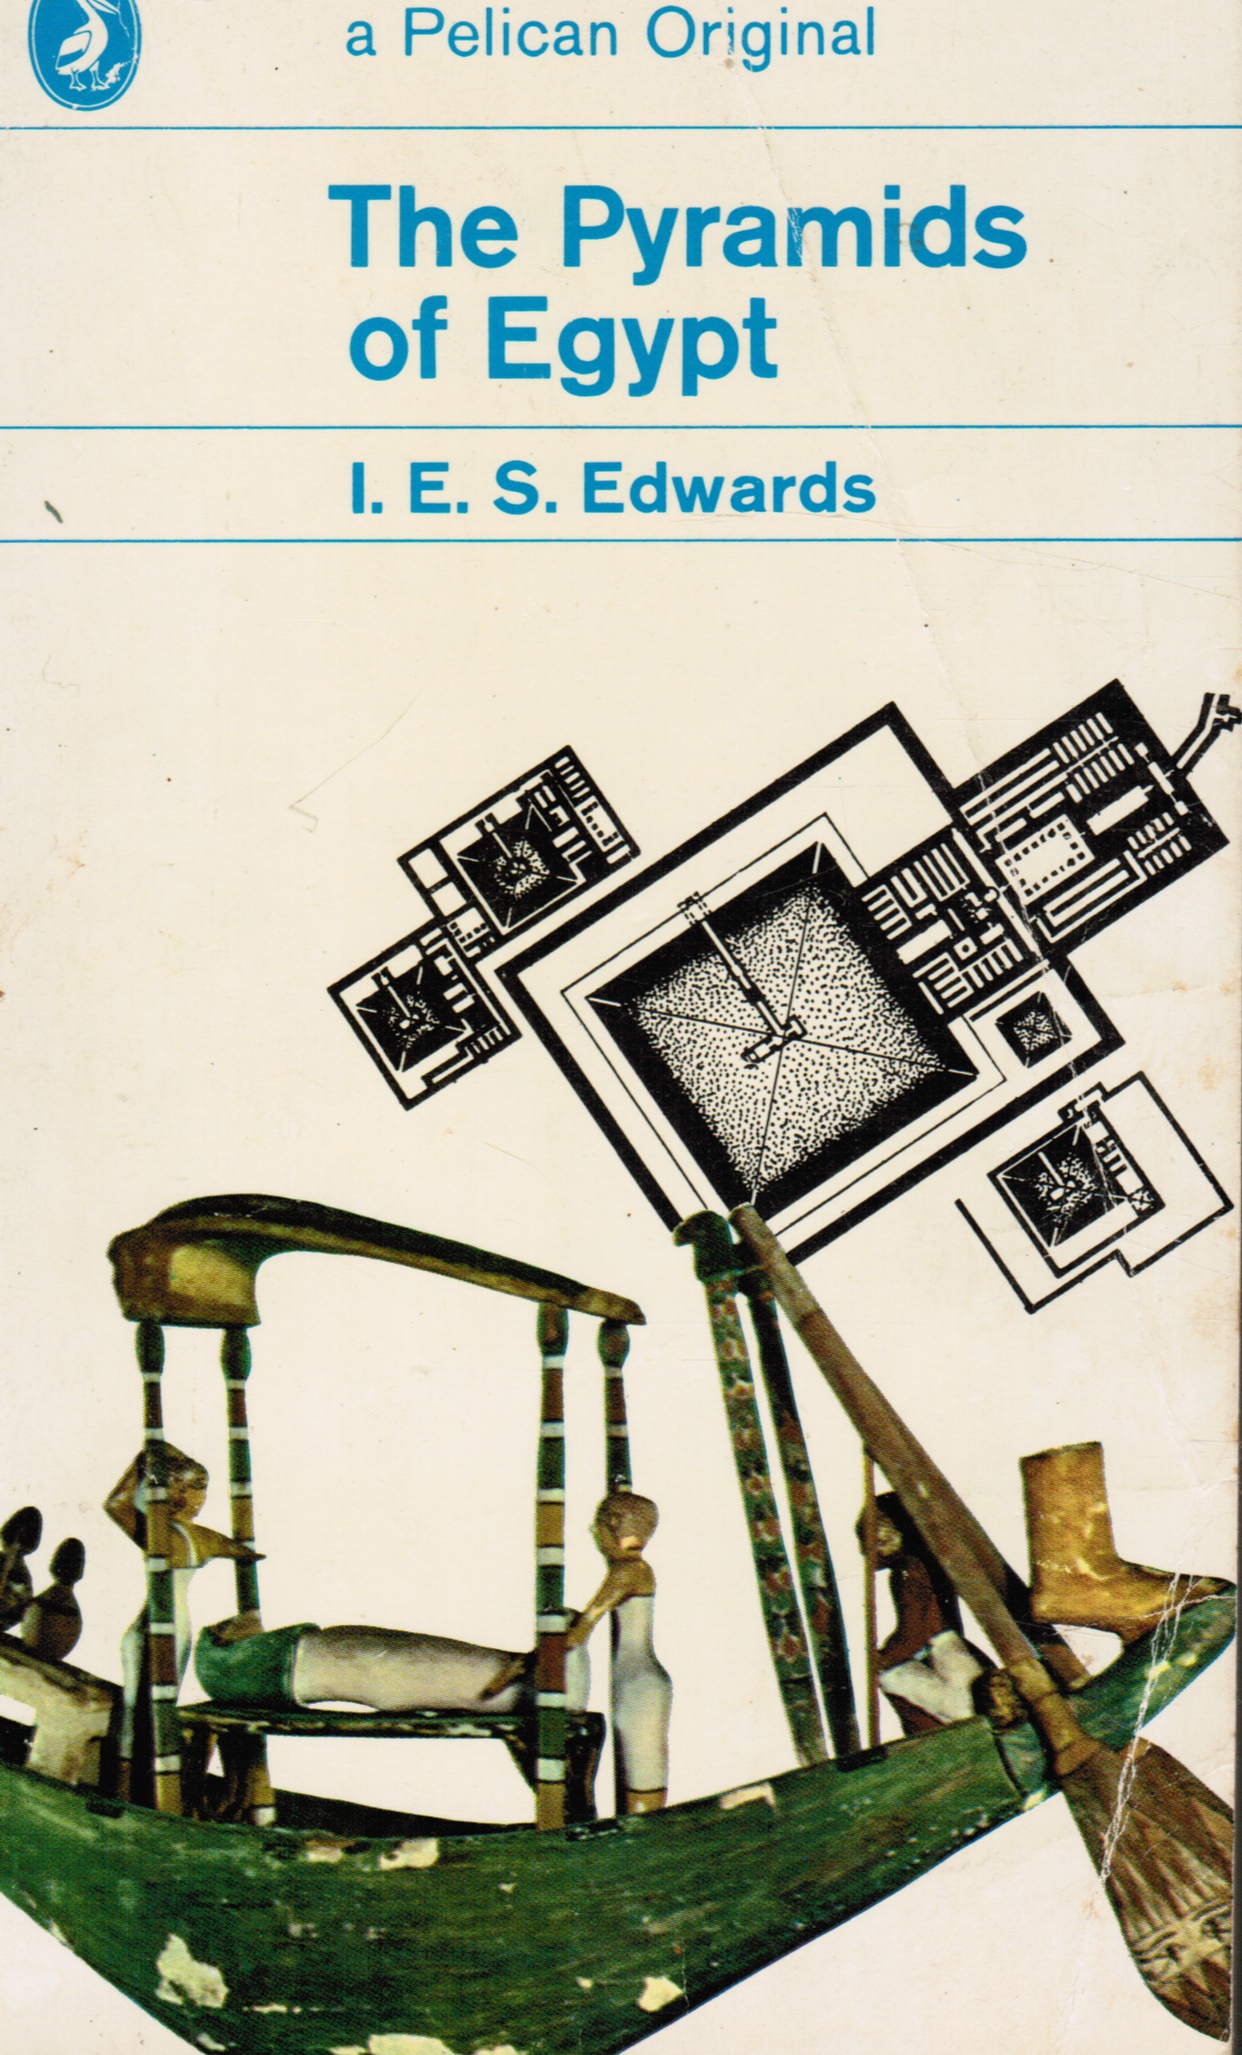 EDWARDS, I. E. S - The Pyramids of Egypt